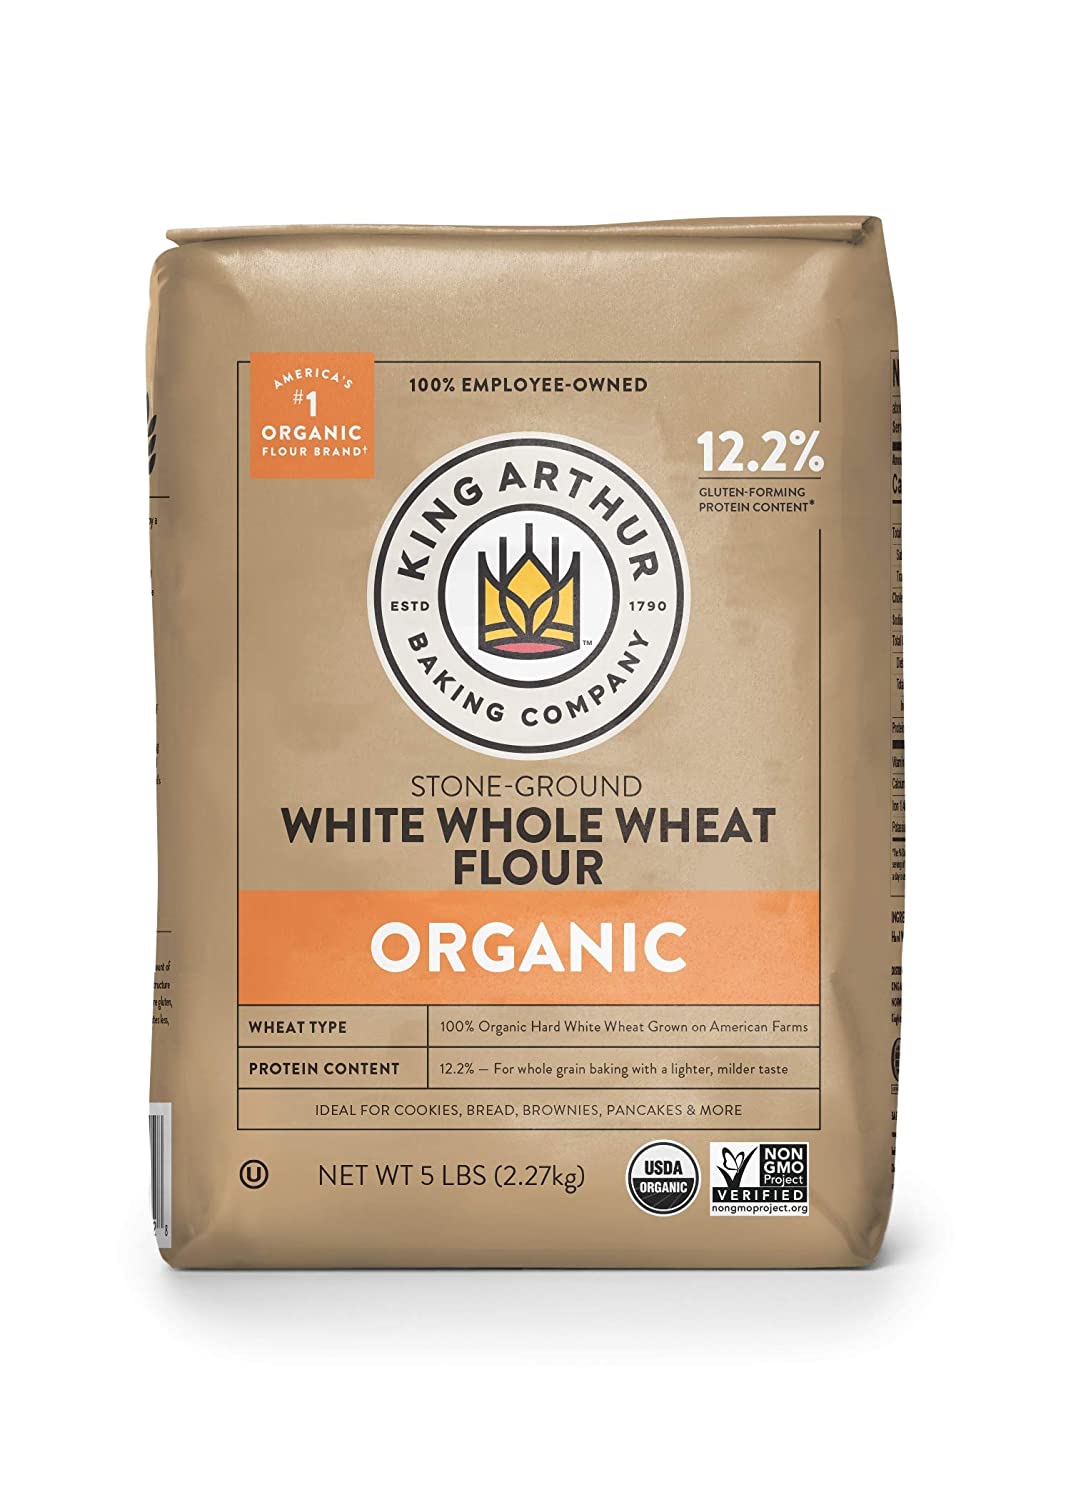 KIng Arthur Organic Whole Wheat Flour